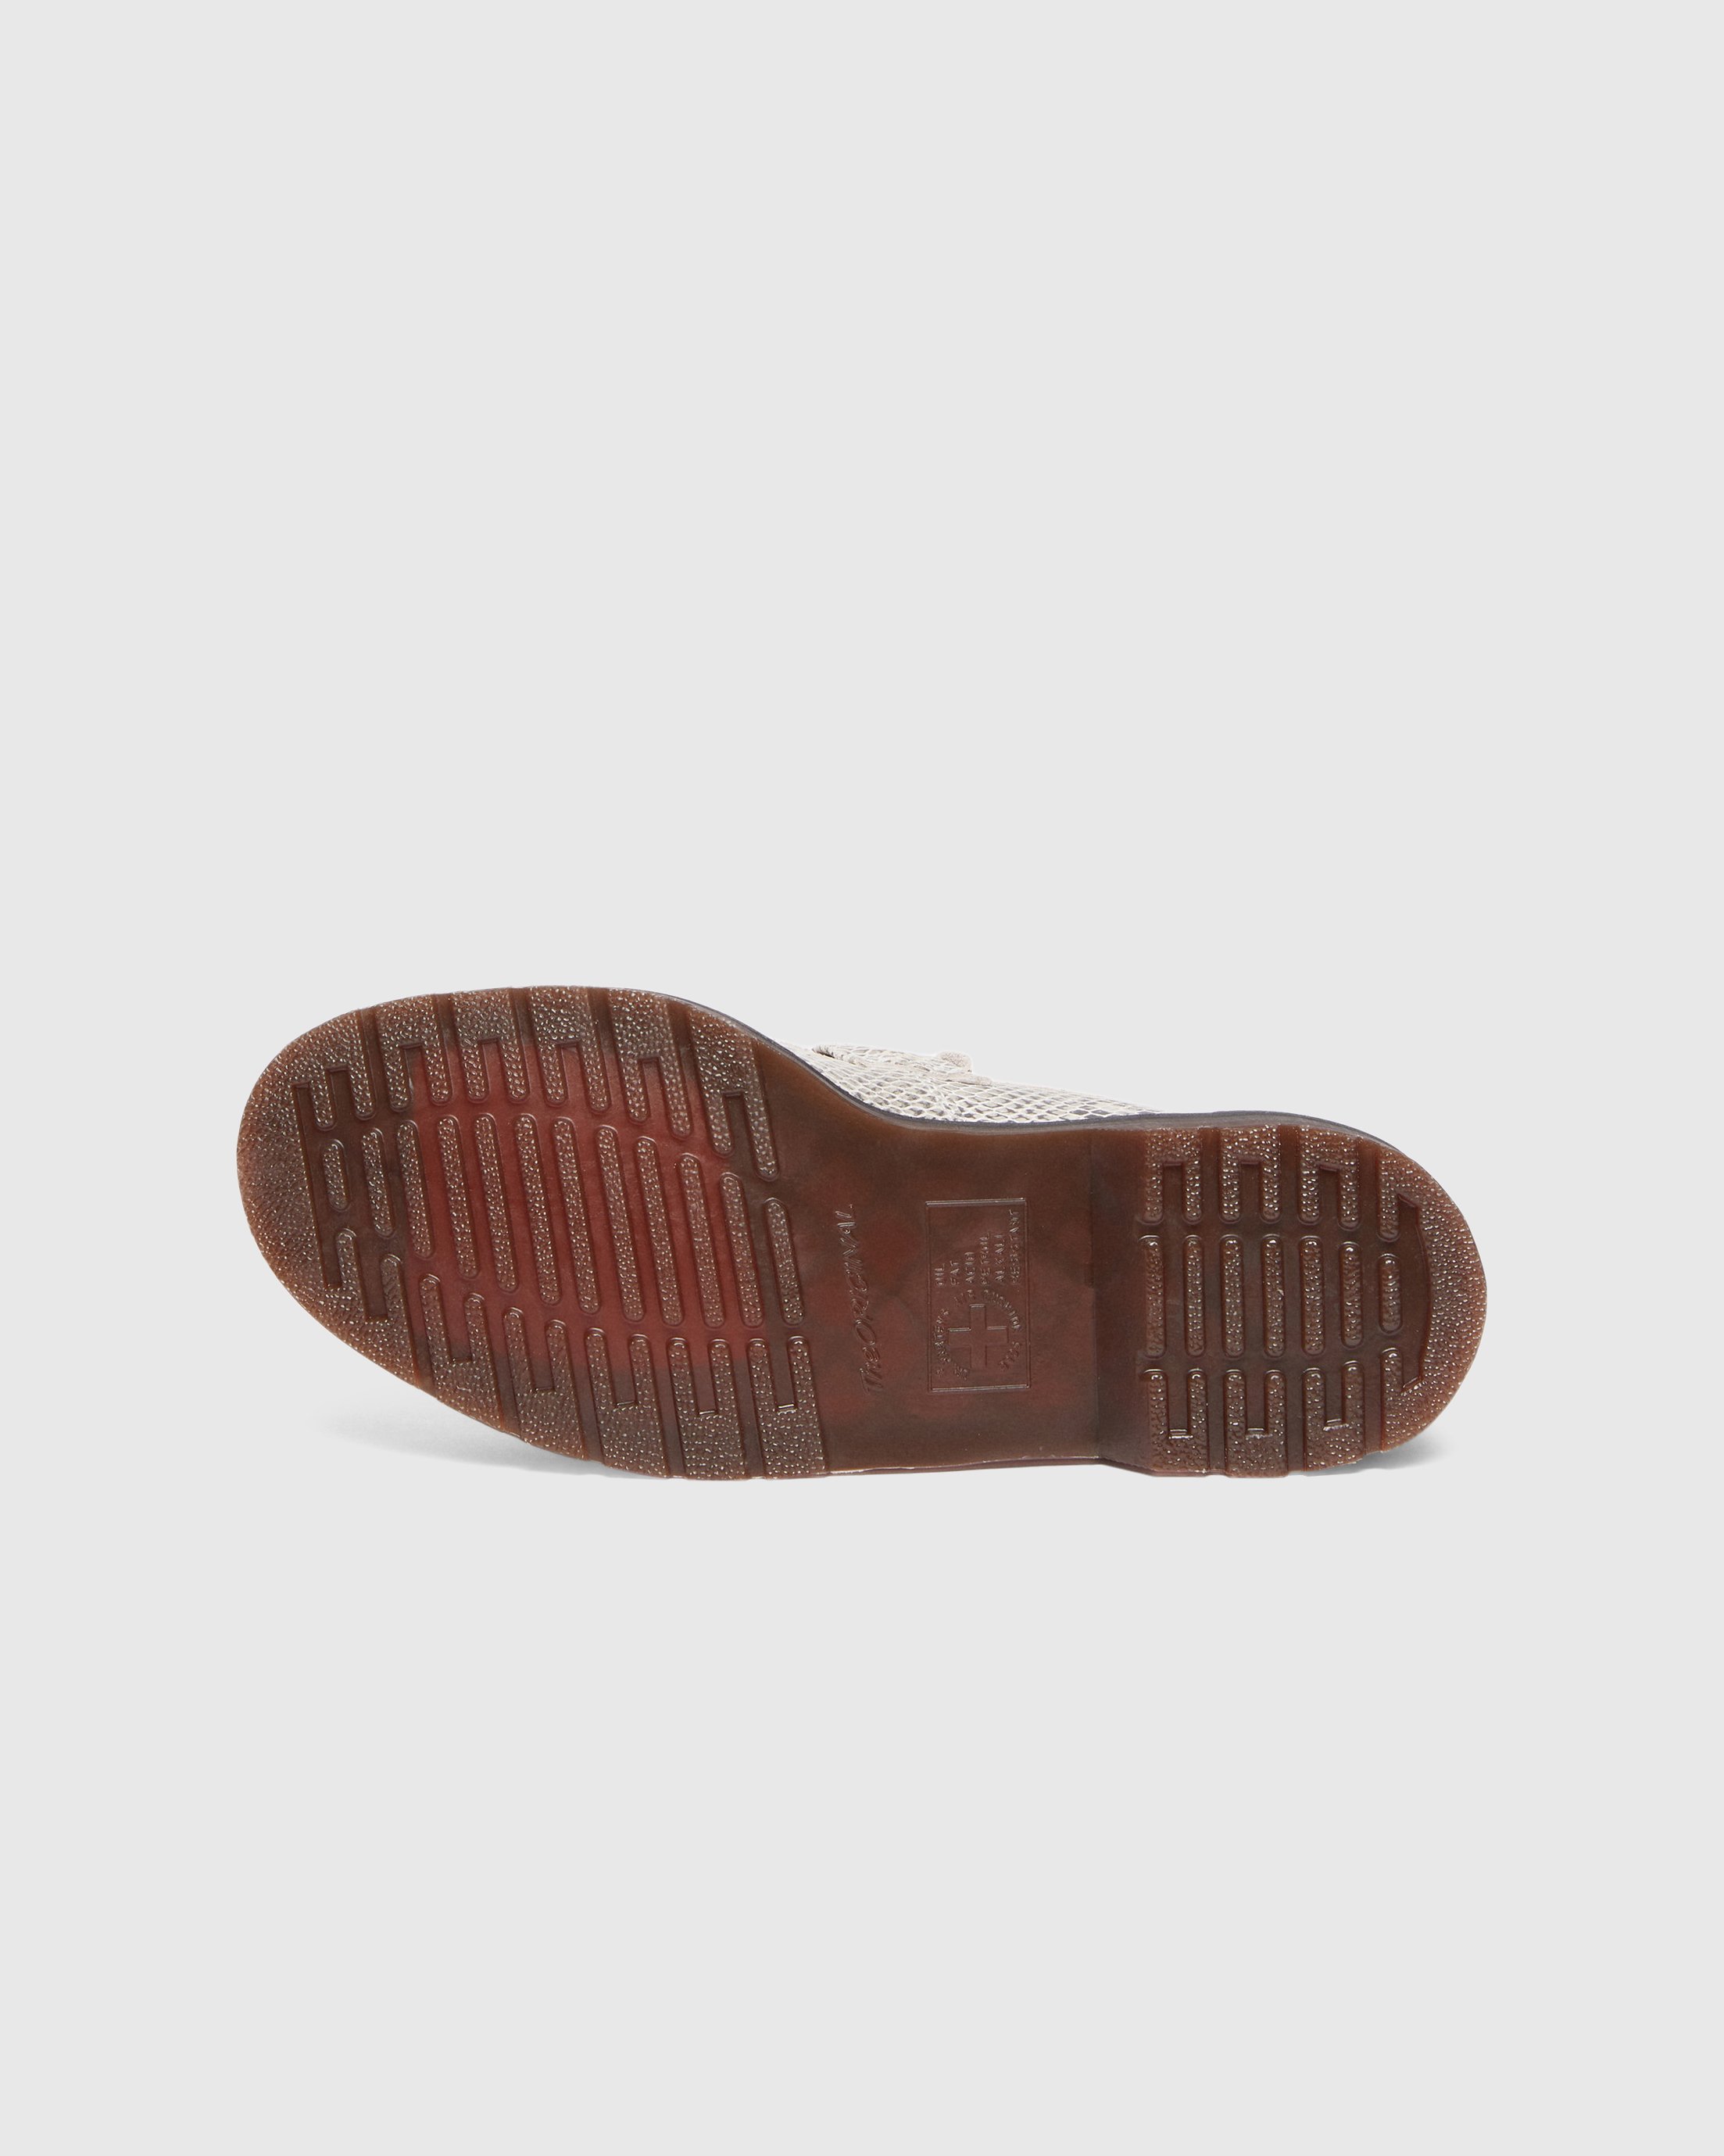 Dr. Martens - Adrian Snaffle Python Print Suede Loafers Sand/Black - Footwear - Grey - Image 5